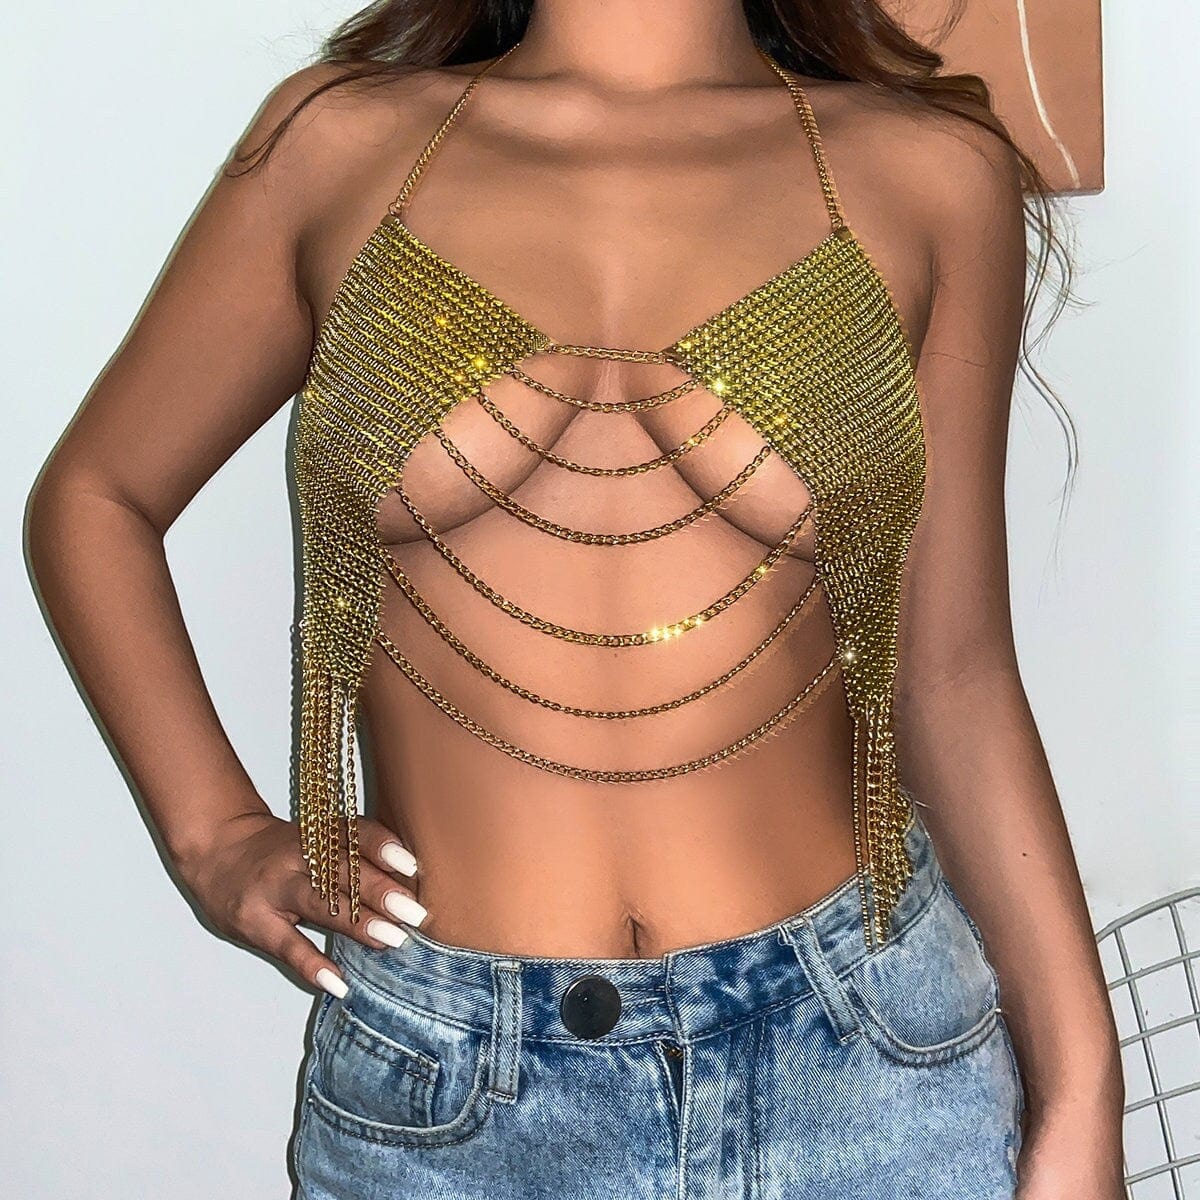 Crystal mesh bra in Crystal for